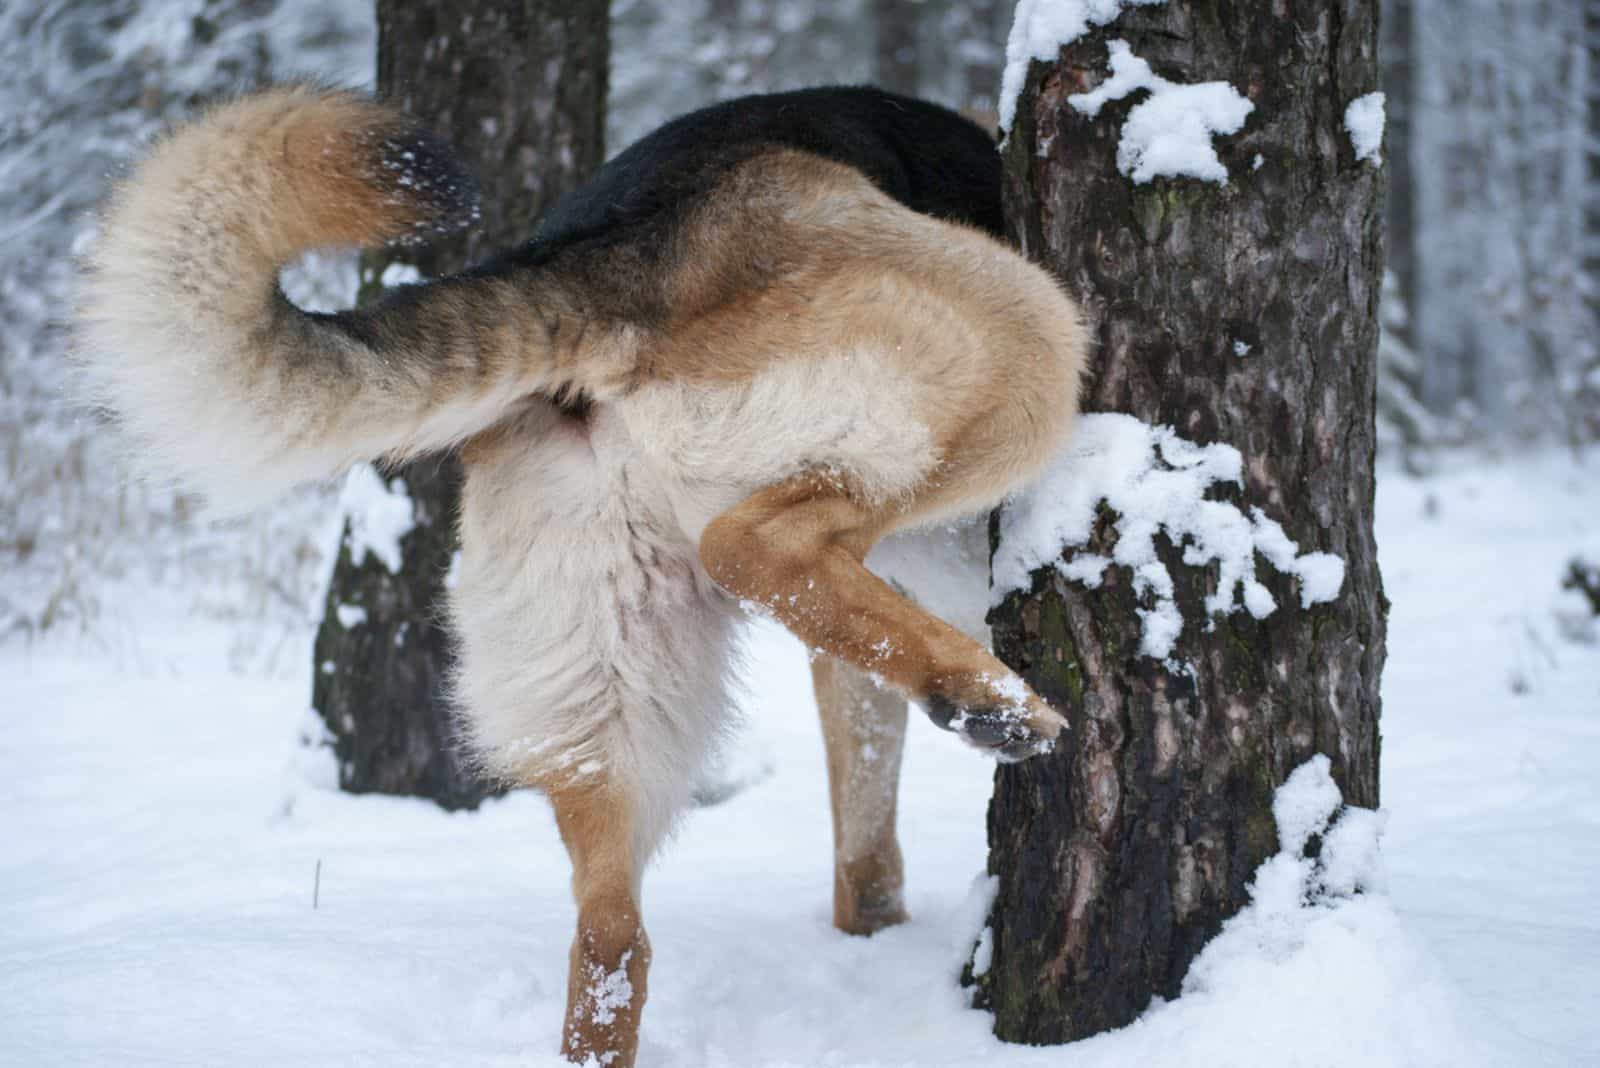 German shepherd dog pissing on a tree in a winter park